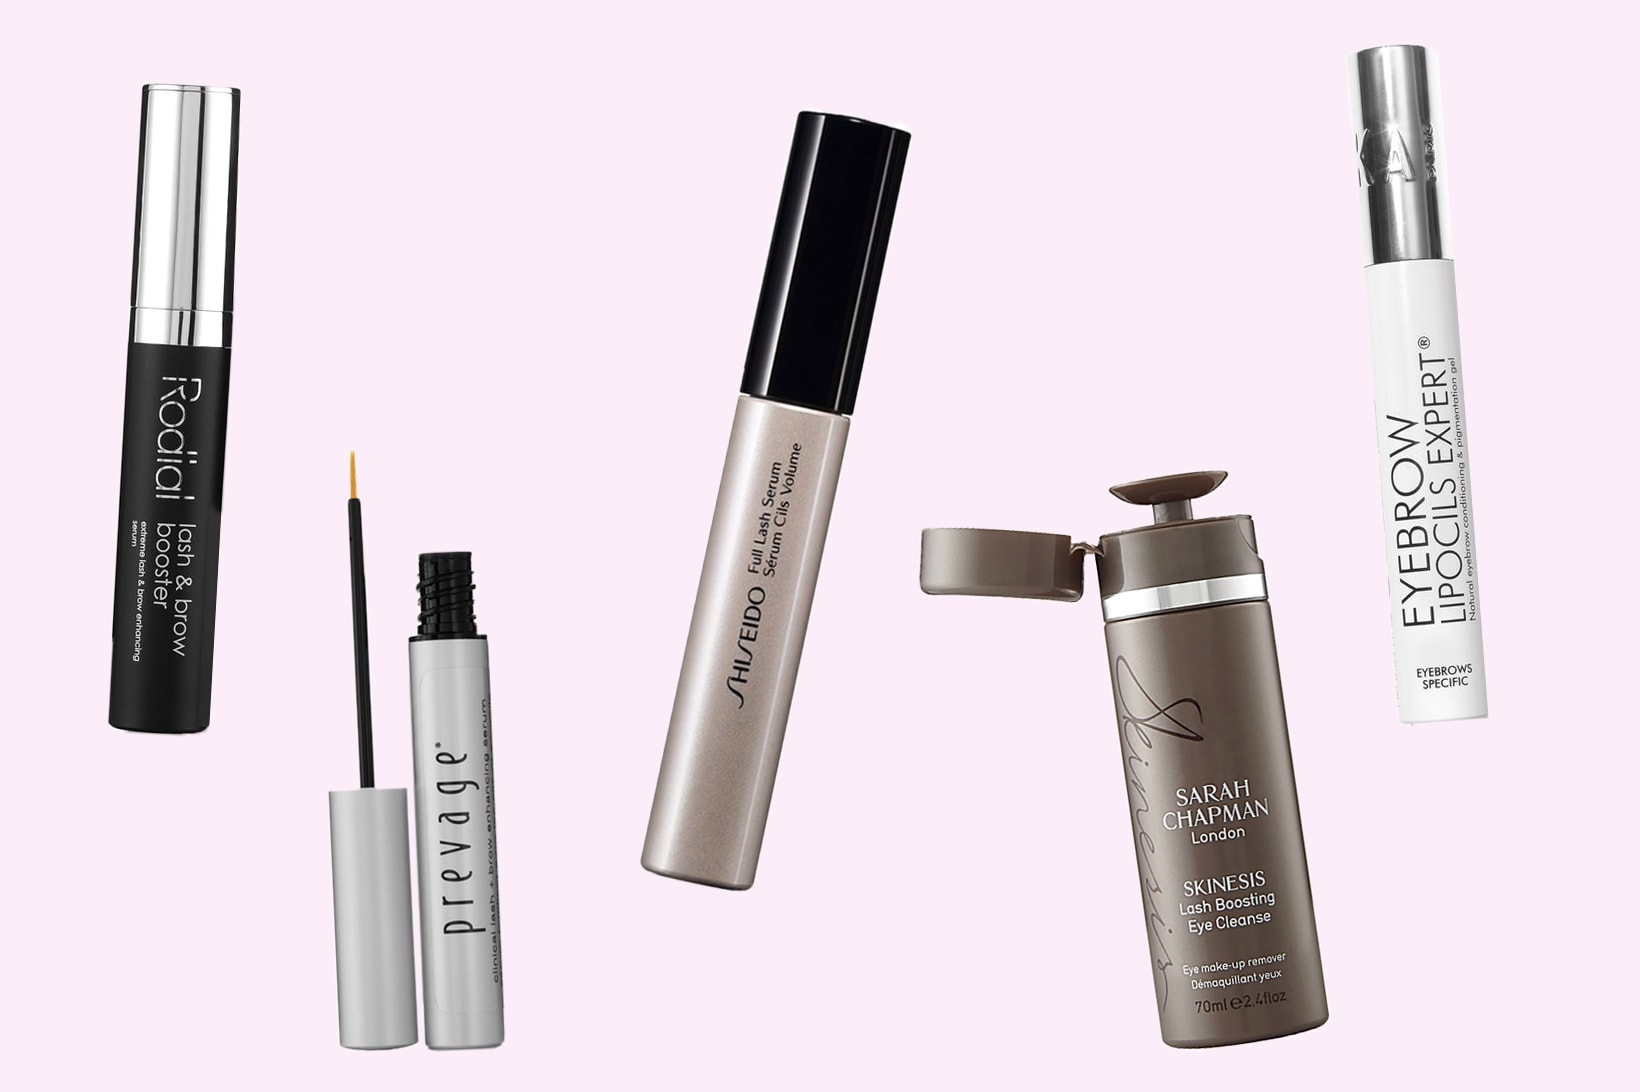 Best Eyebrow Eyelash Growth Serum Products Cleanser Shiseido Elizabeth Arden Rodial talika lipocils Sarah Chapman